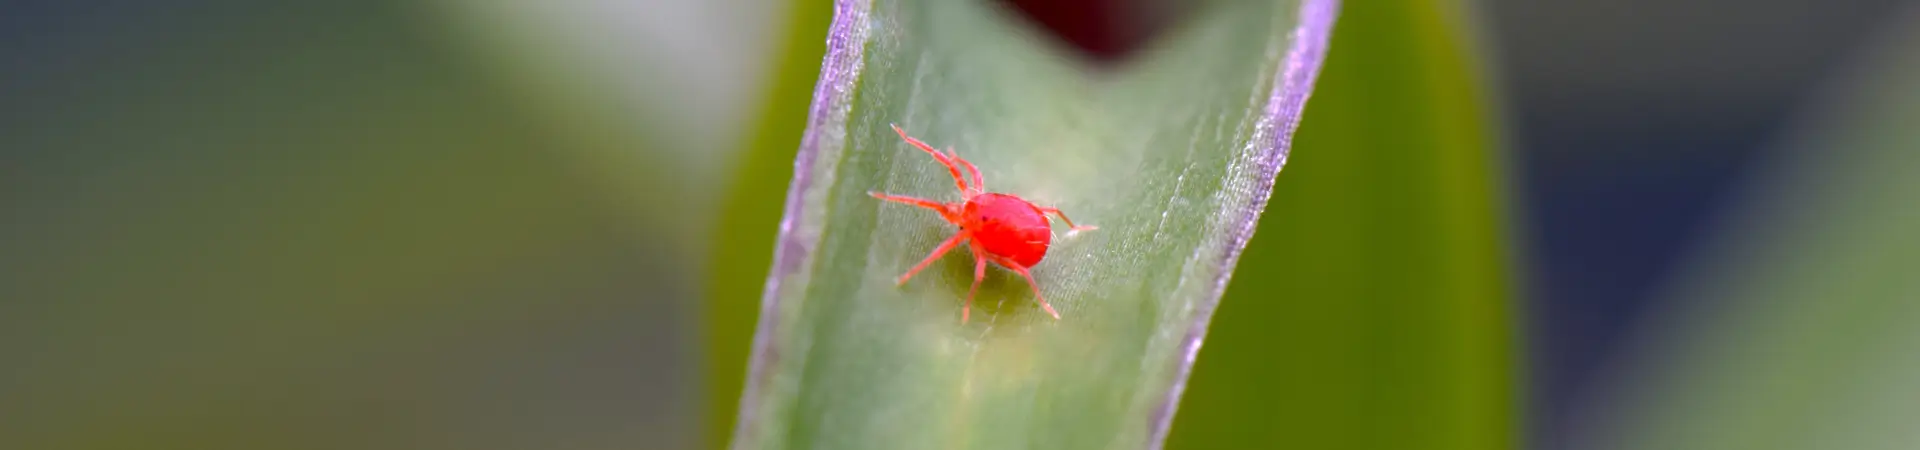 Mites | Lookout Pest Control